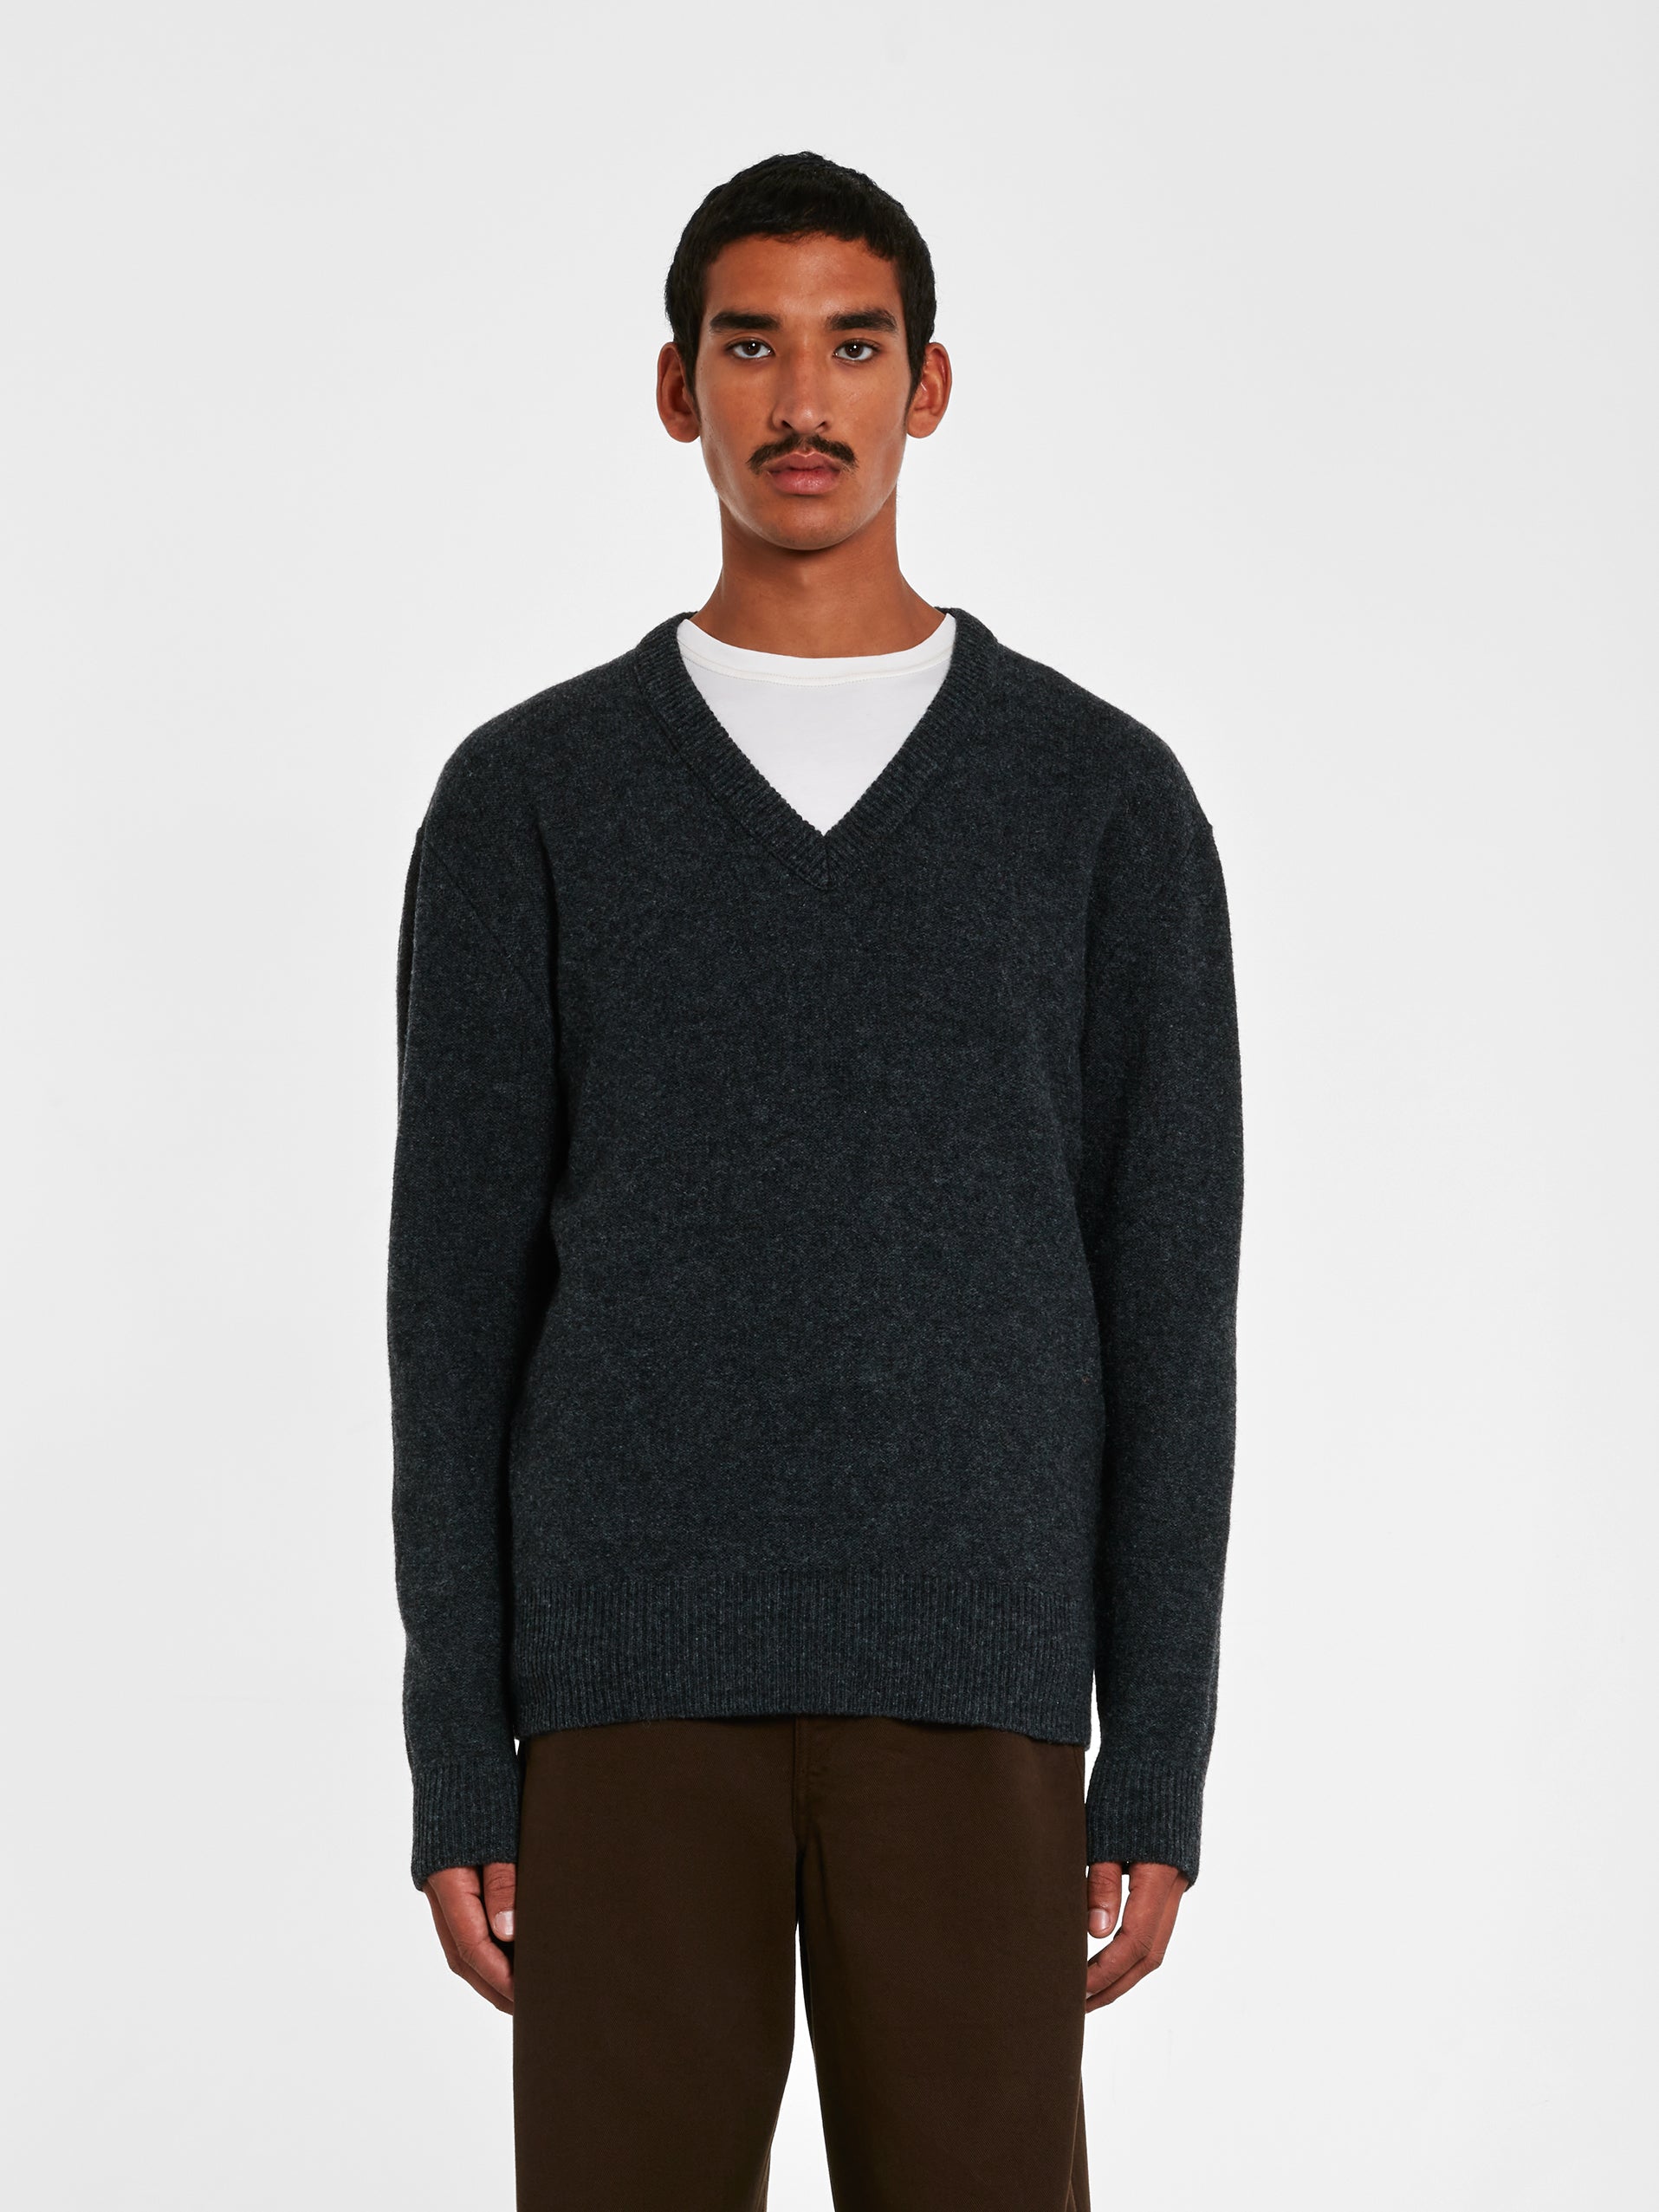 Lemaire - Men’s V-Neck Sweater - (Black) view 1